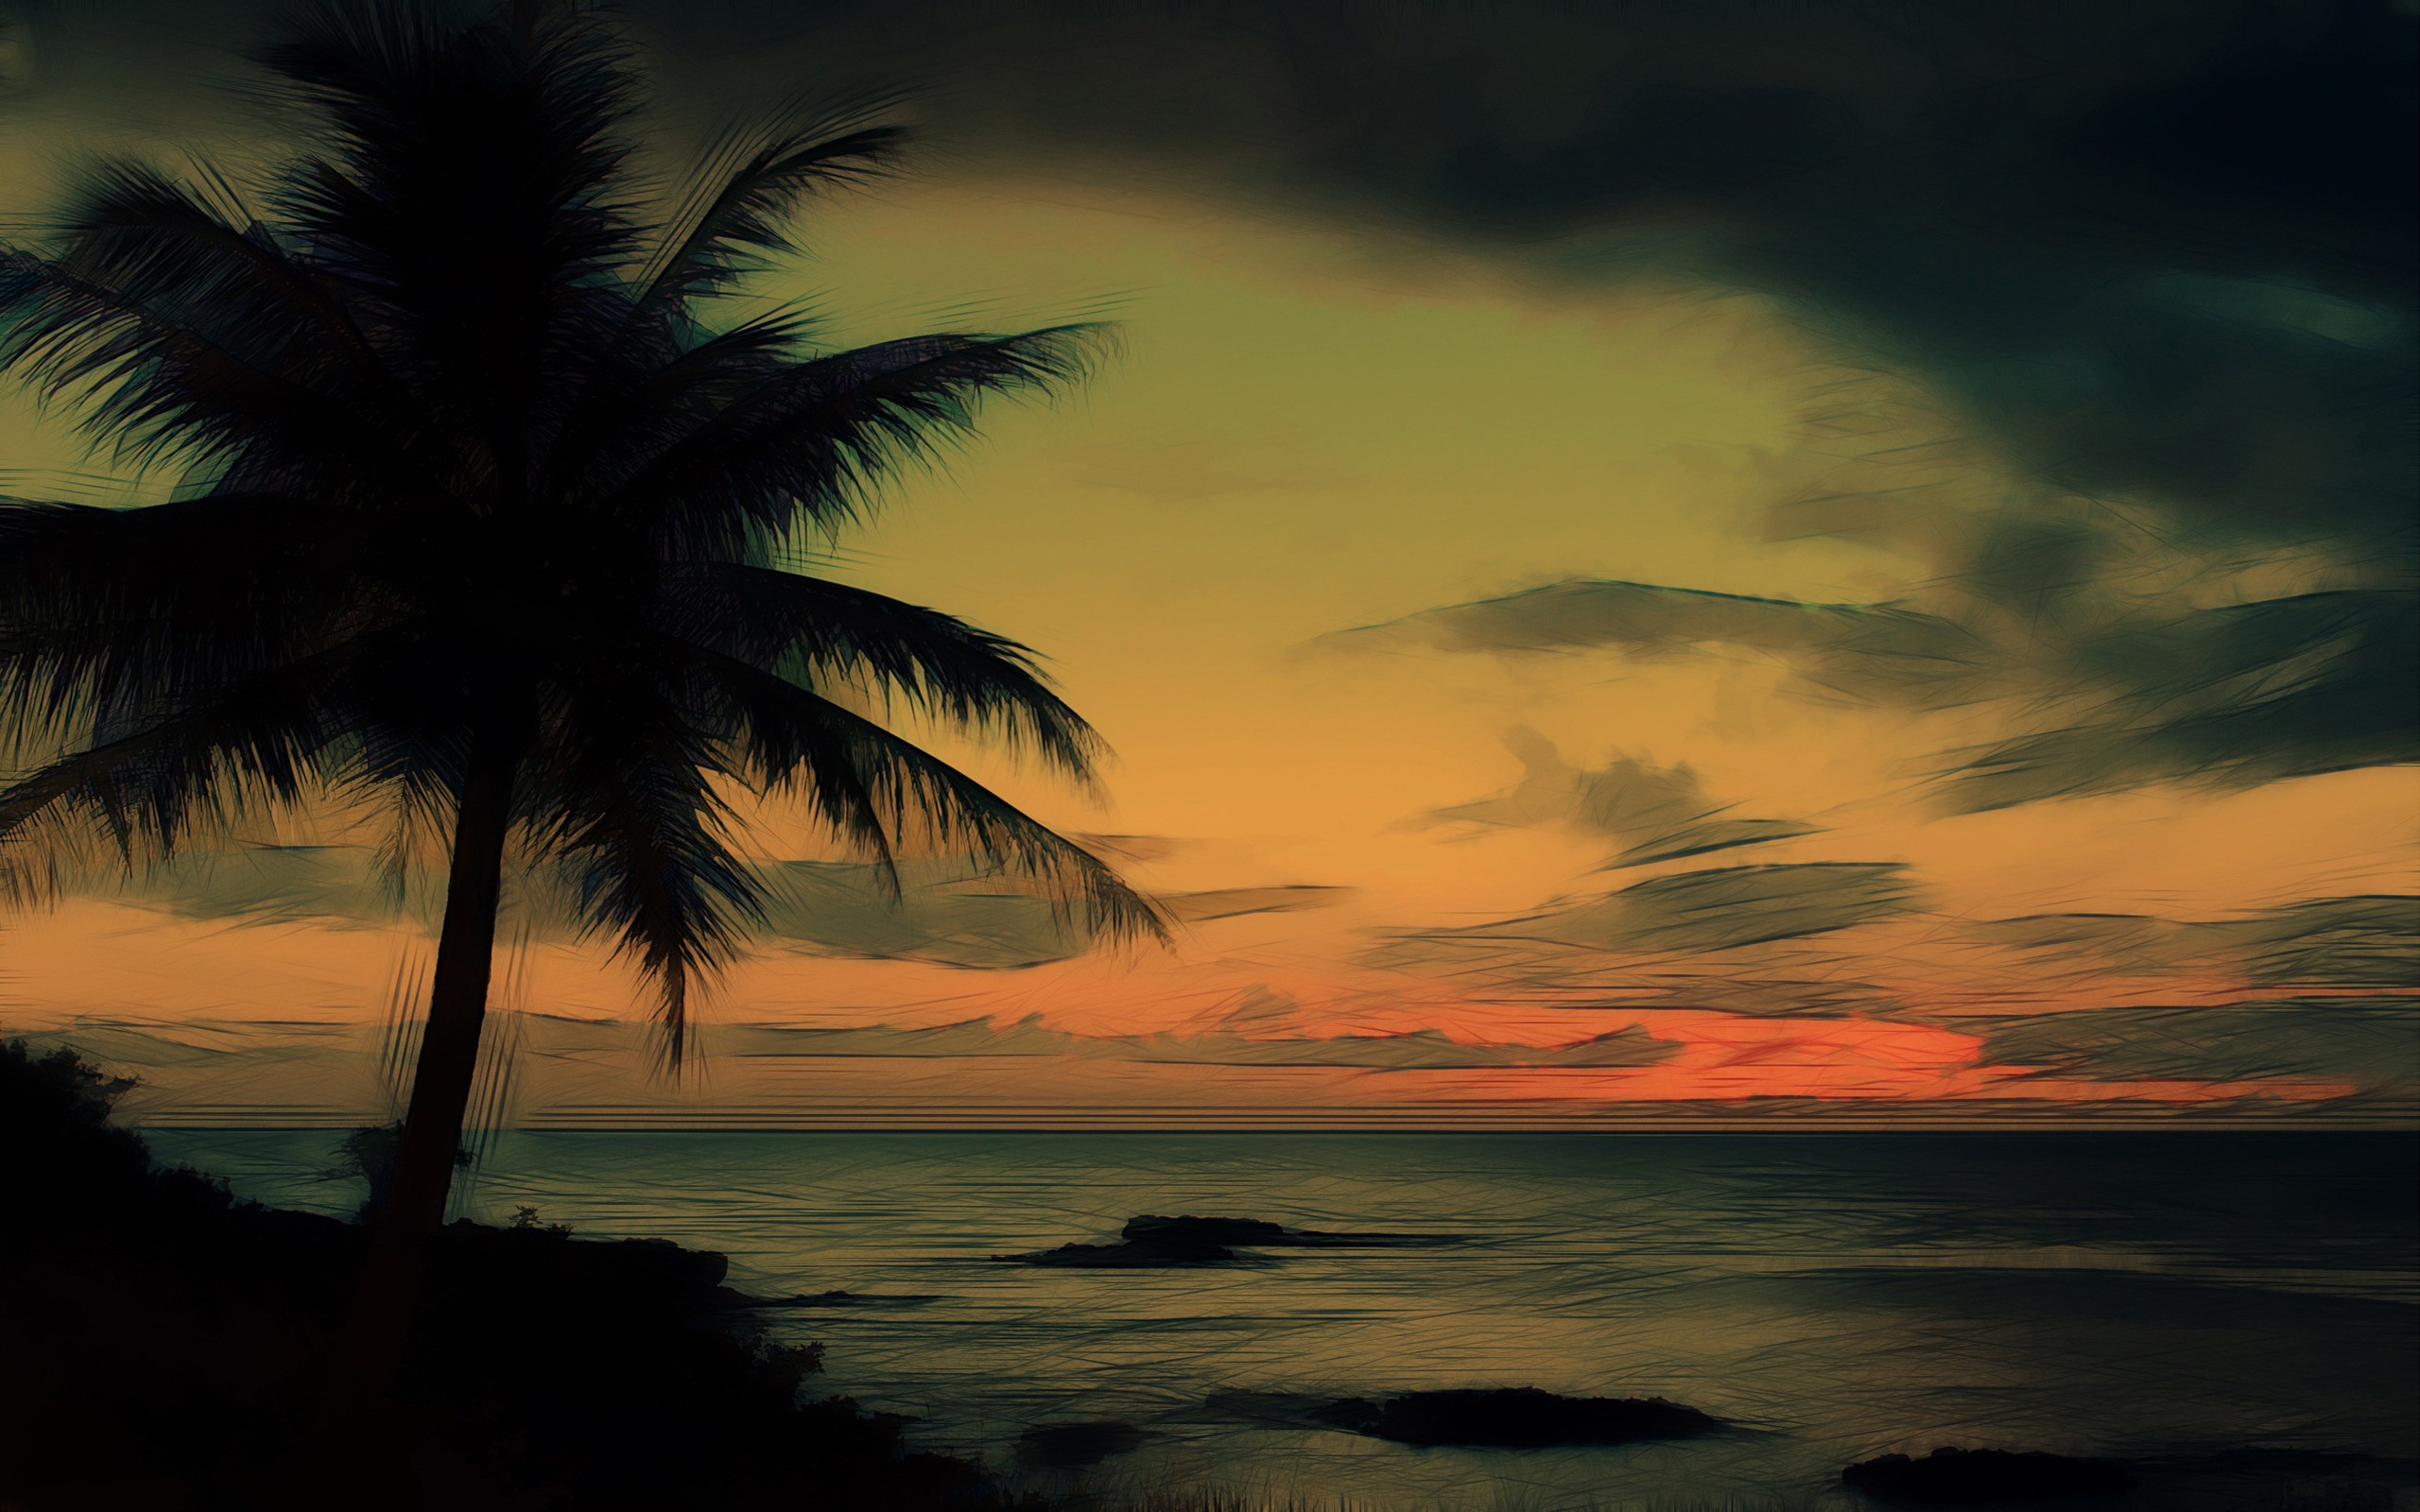 General 2560x1600 beach digital art effects photoshopped sky sunlight dark palm trees